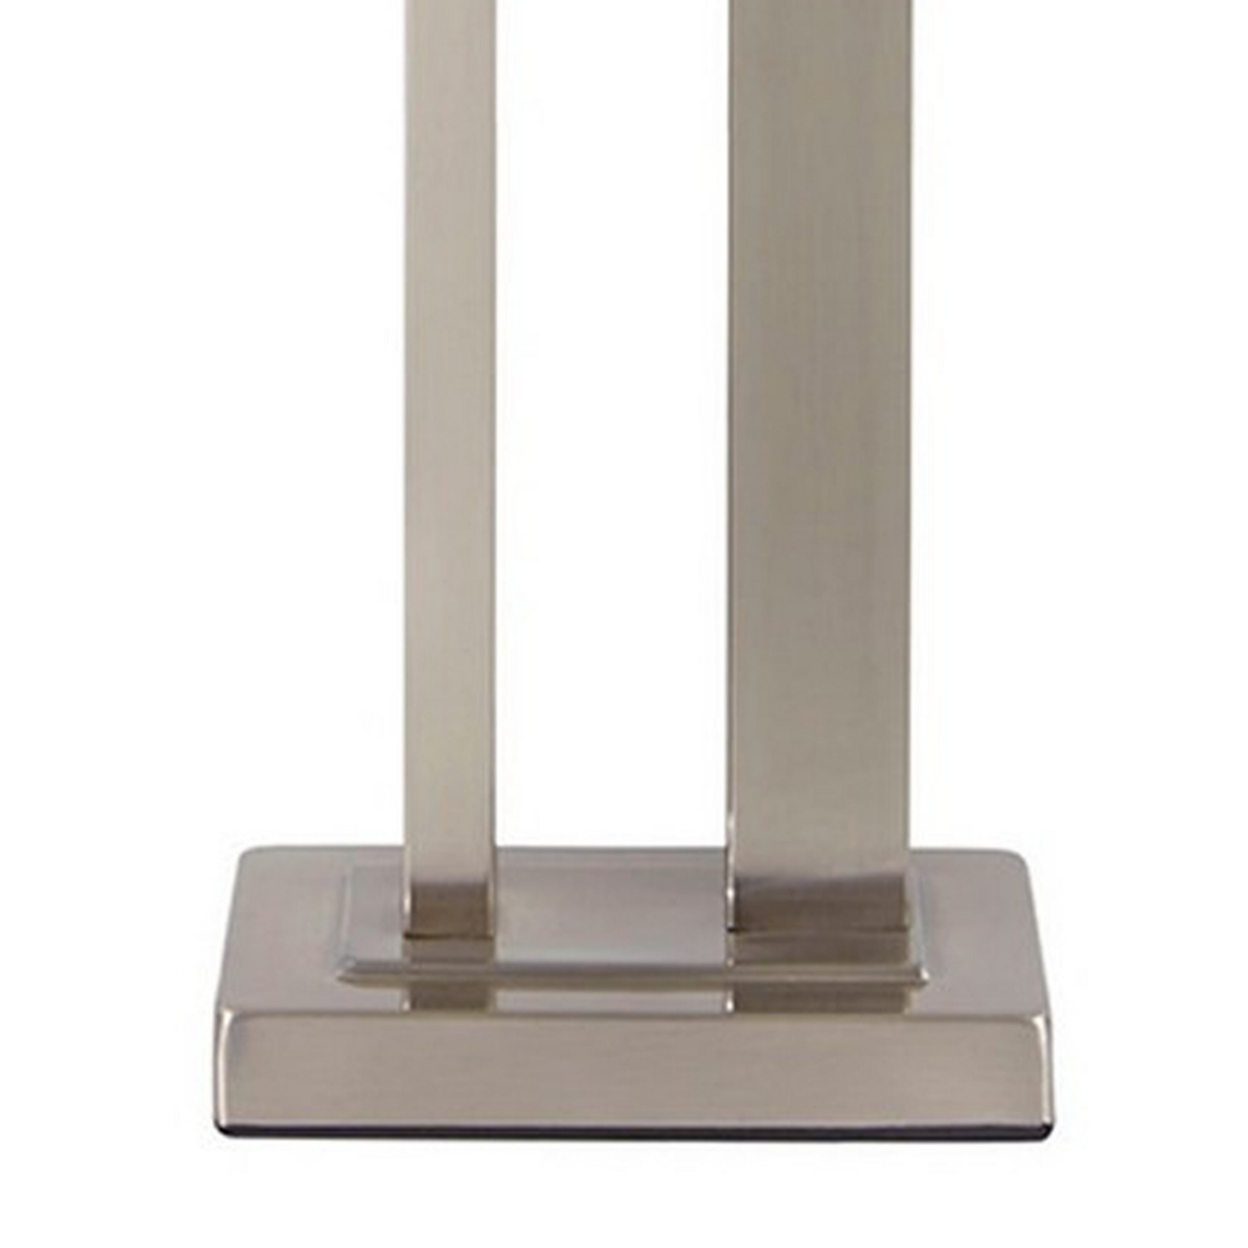 Metal Frame Table Lamp With Hardback Shade, Set Of 2, White And Silver- Saltoro Sherpi